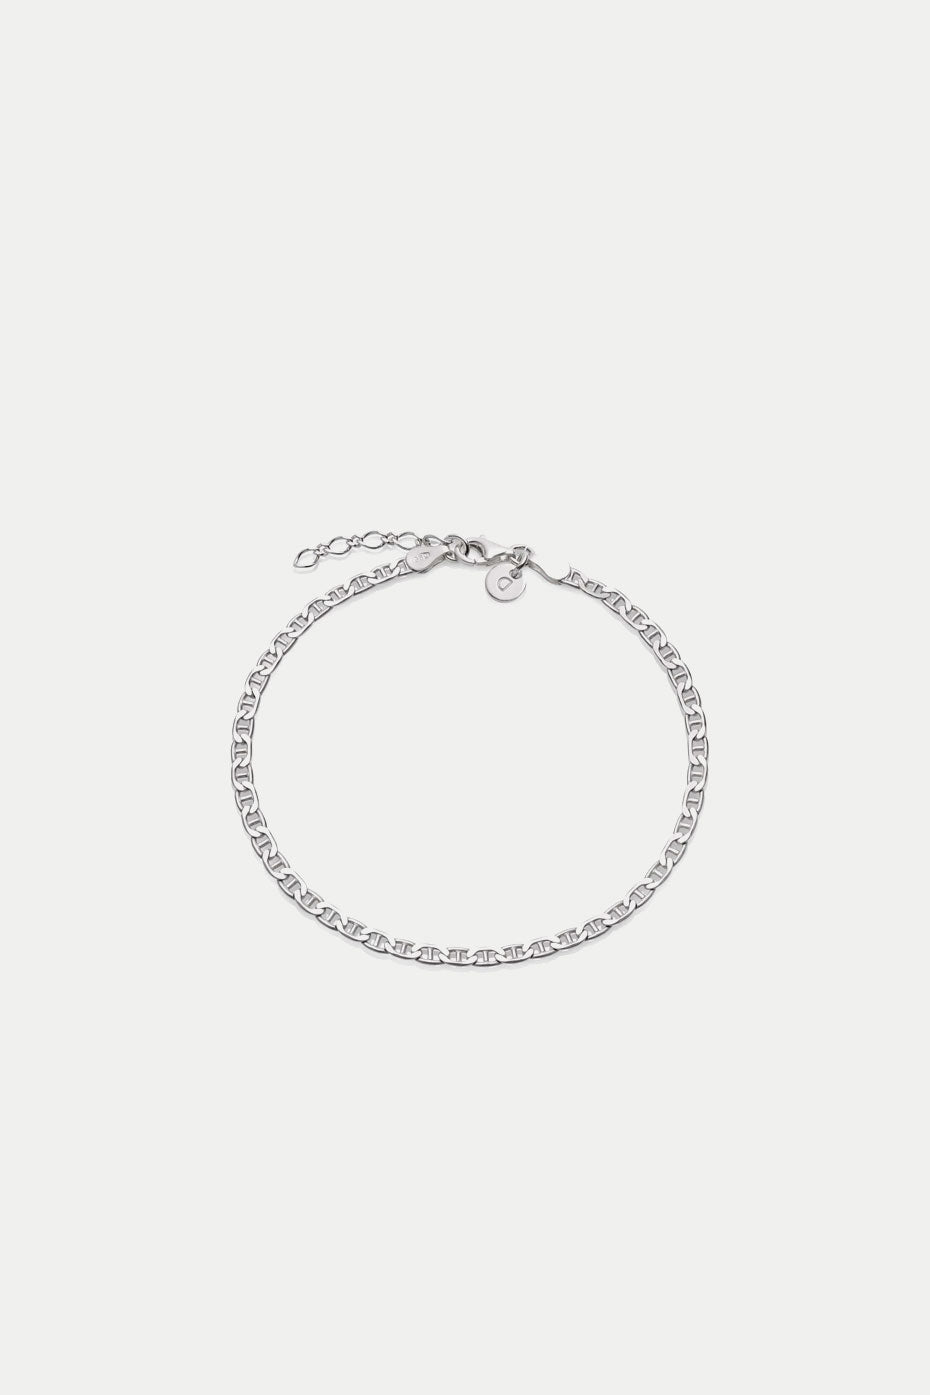 daisy-london-silver-infinity-chain-barcelet